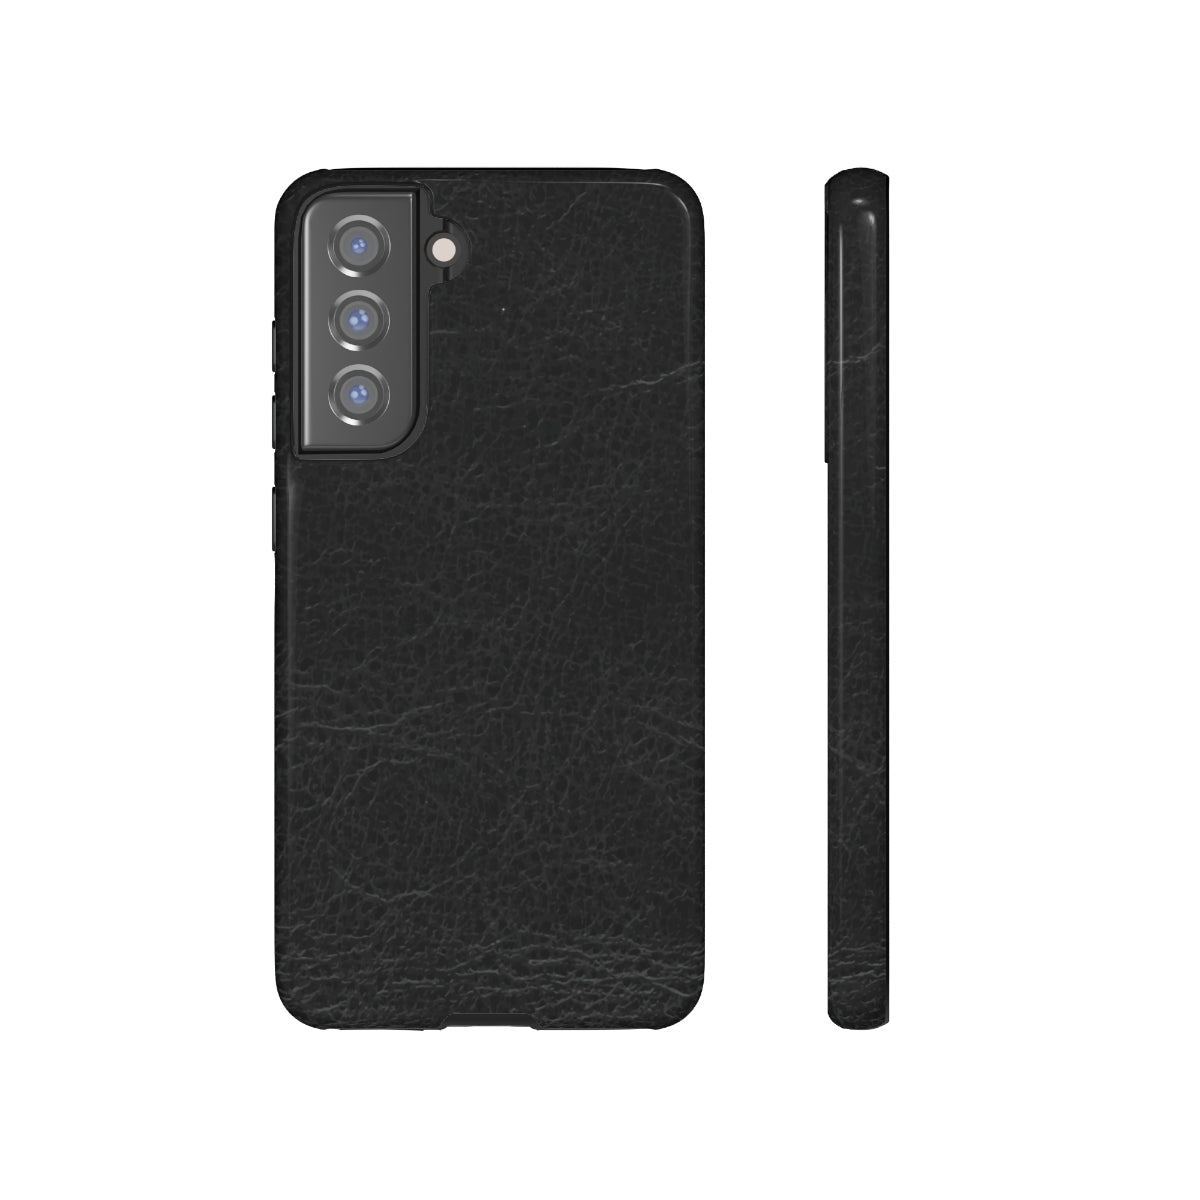 LEATHERTONE [Black] Tough Cases - Samsung S21 FE / Glossy